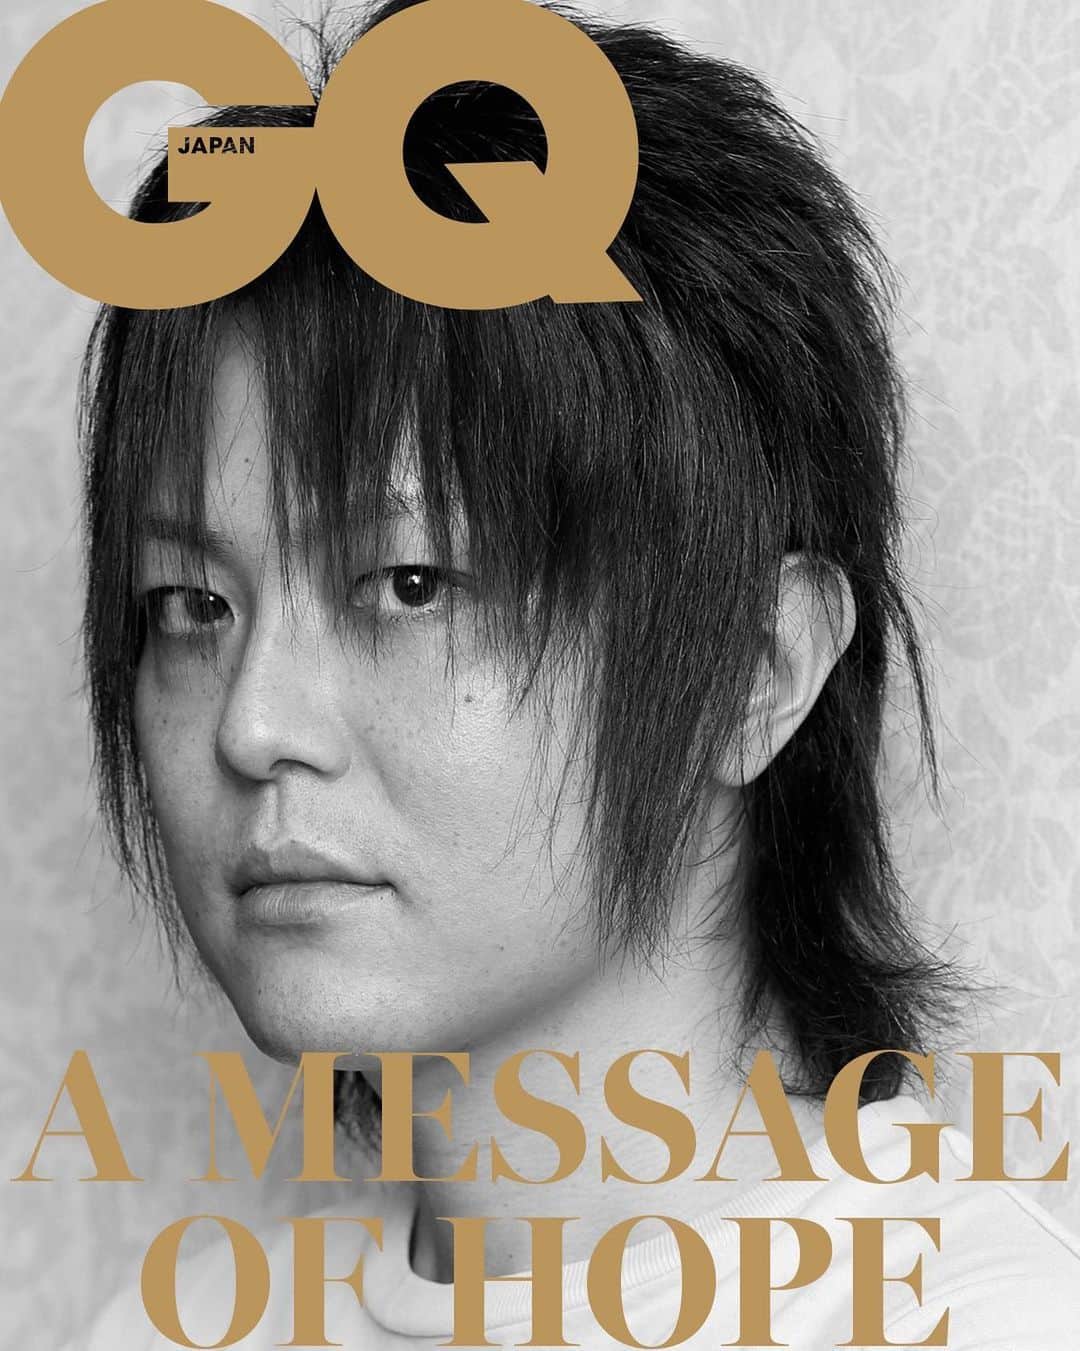 GQ JAPANのインスタグラム